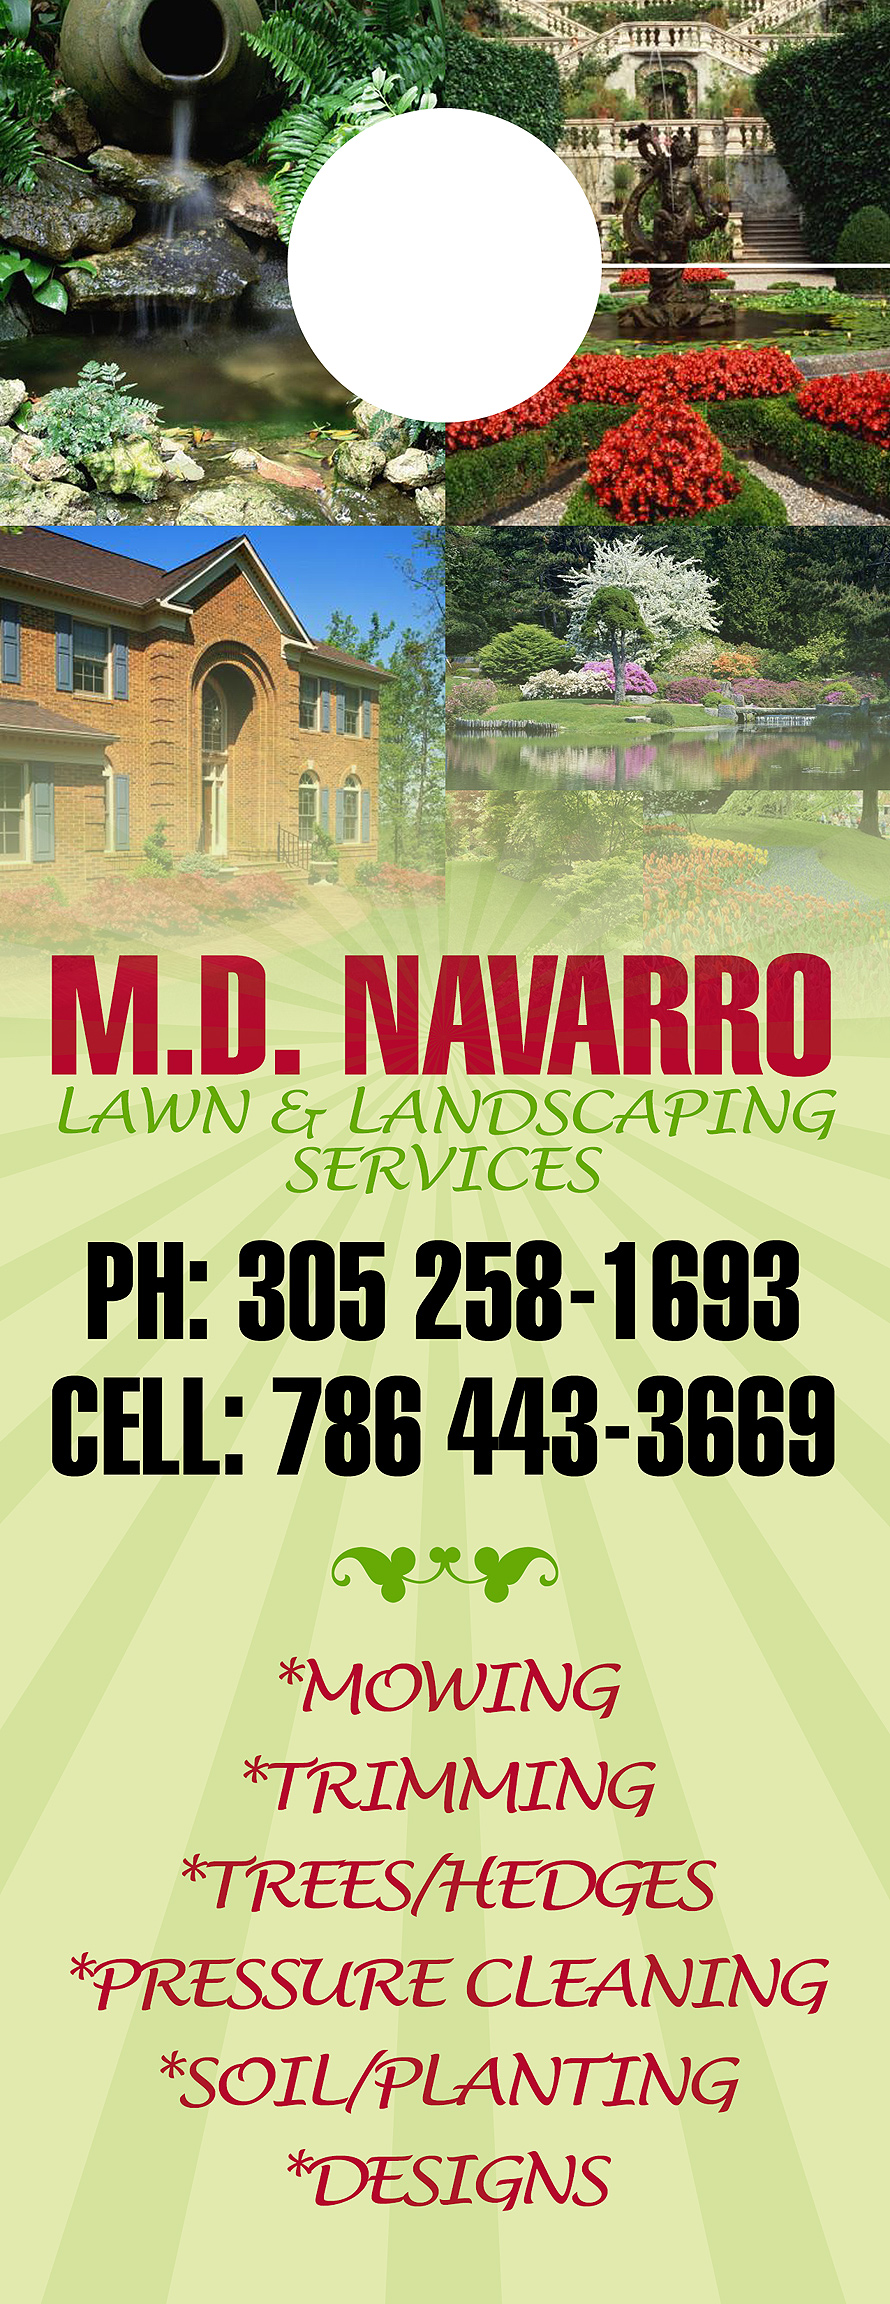 M.D. Navarro Lawn & Landscaping Services 